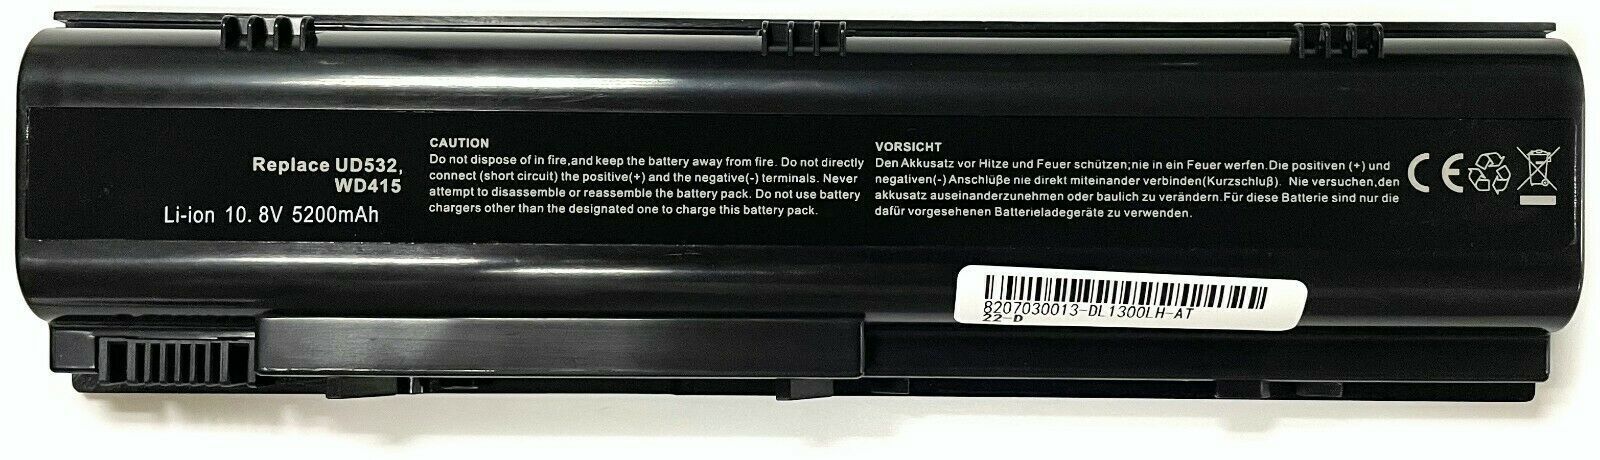 US SHIP Battery for Dell Inspiron 1300 B120 B130 HD438 Latitude 120L 312-0416